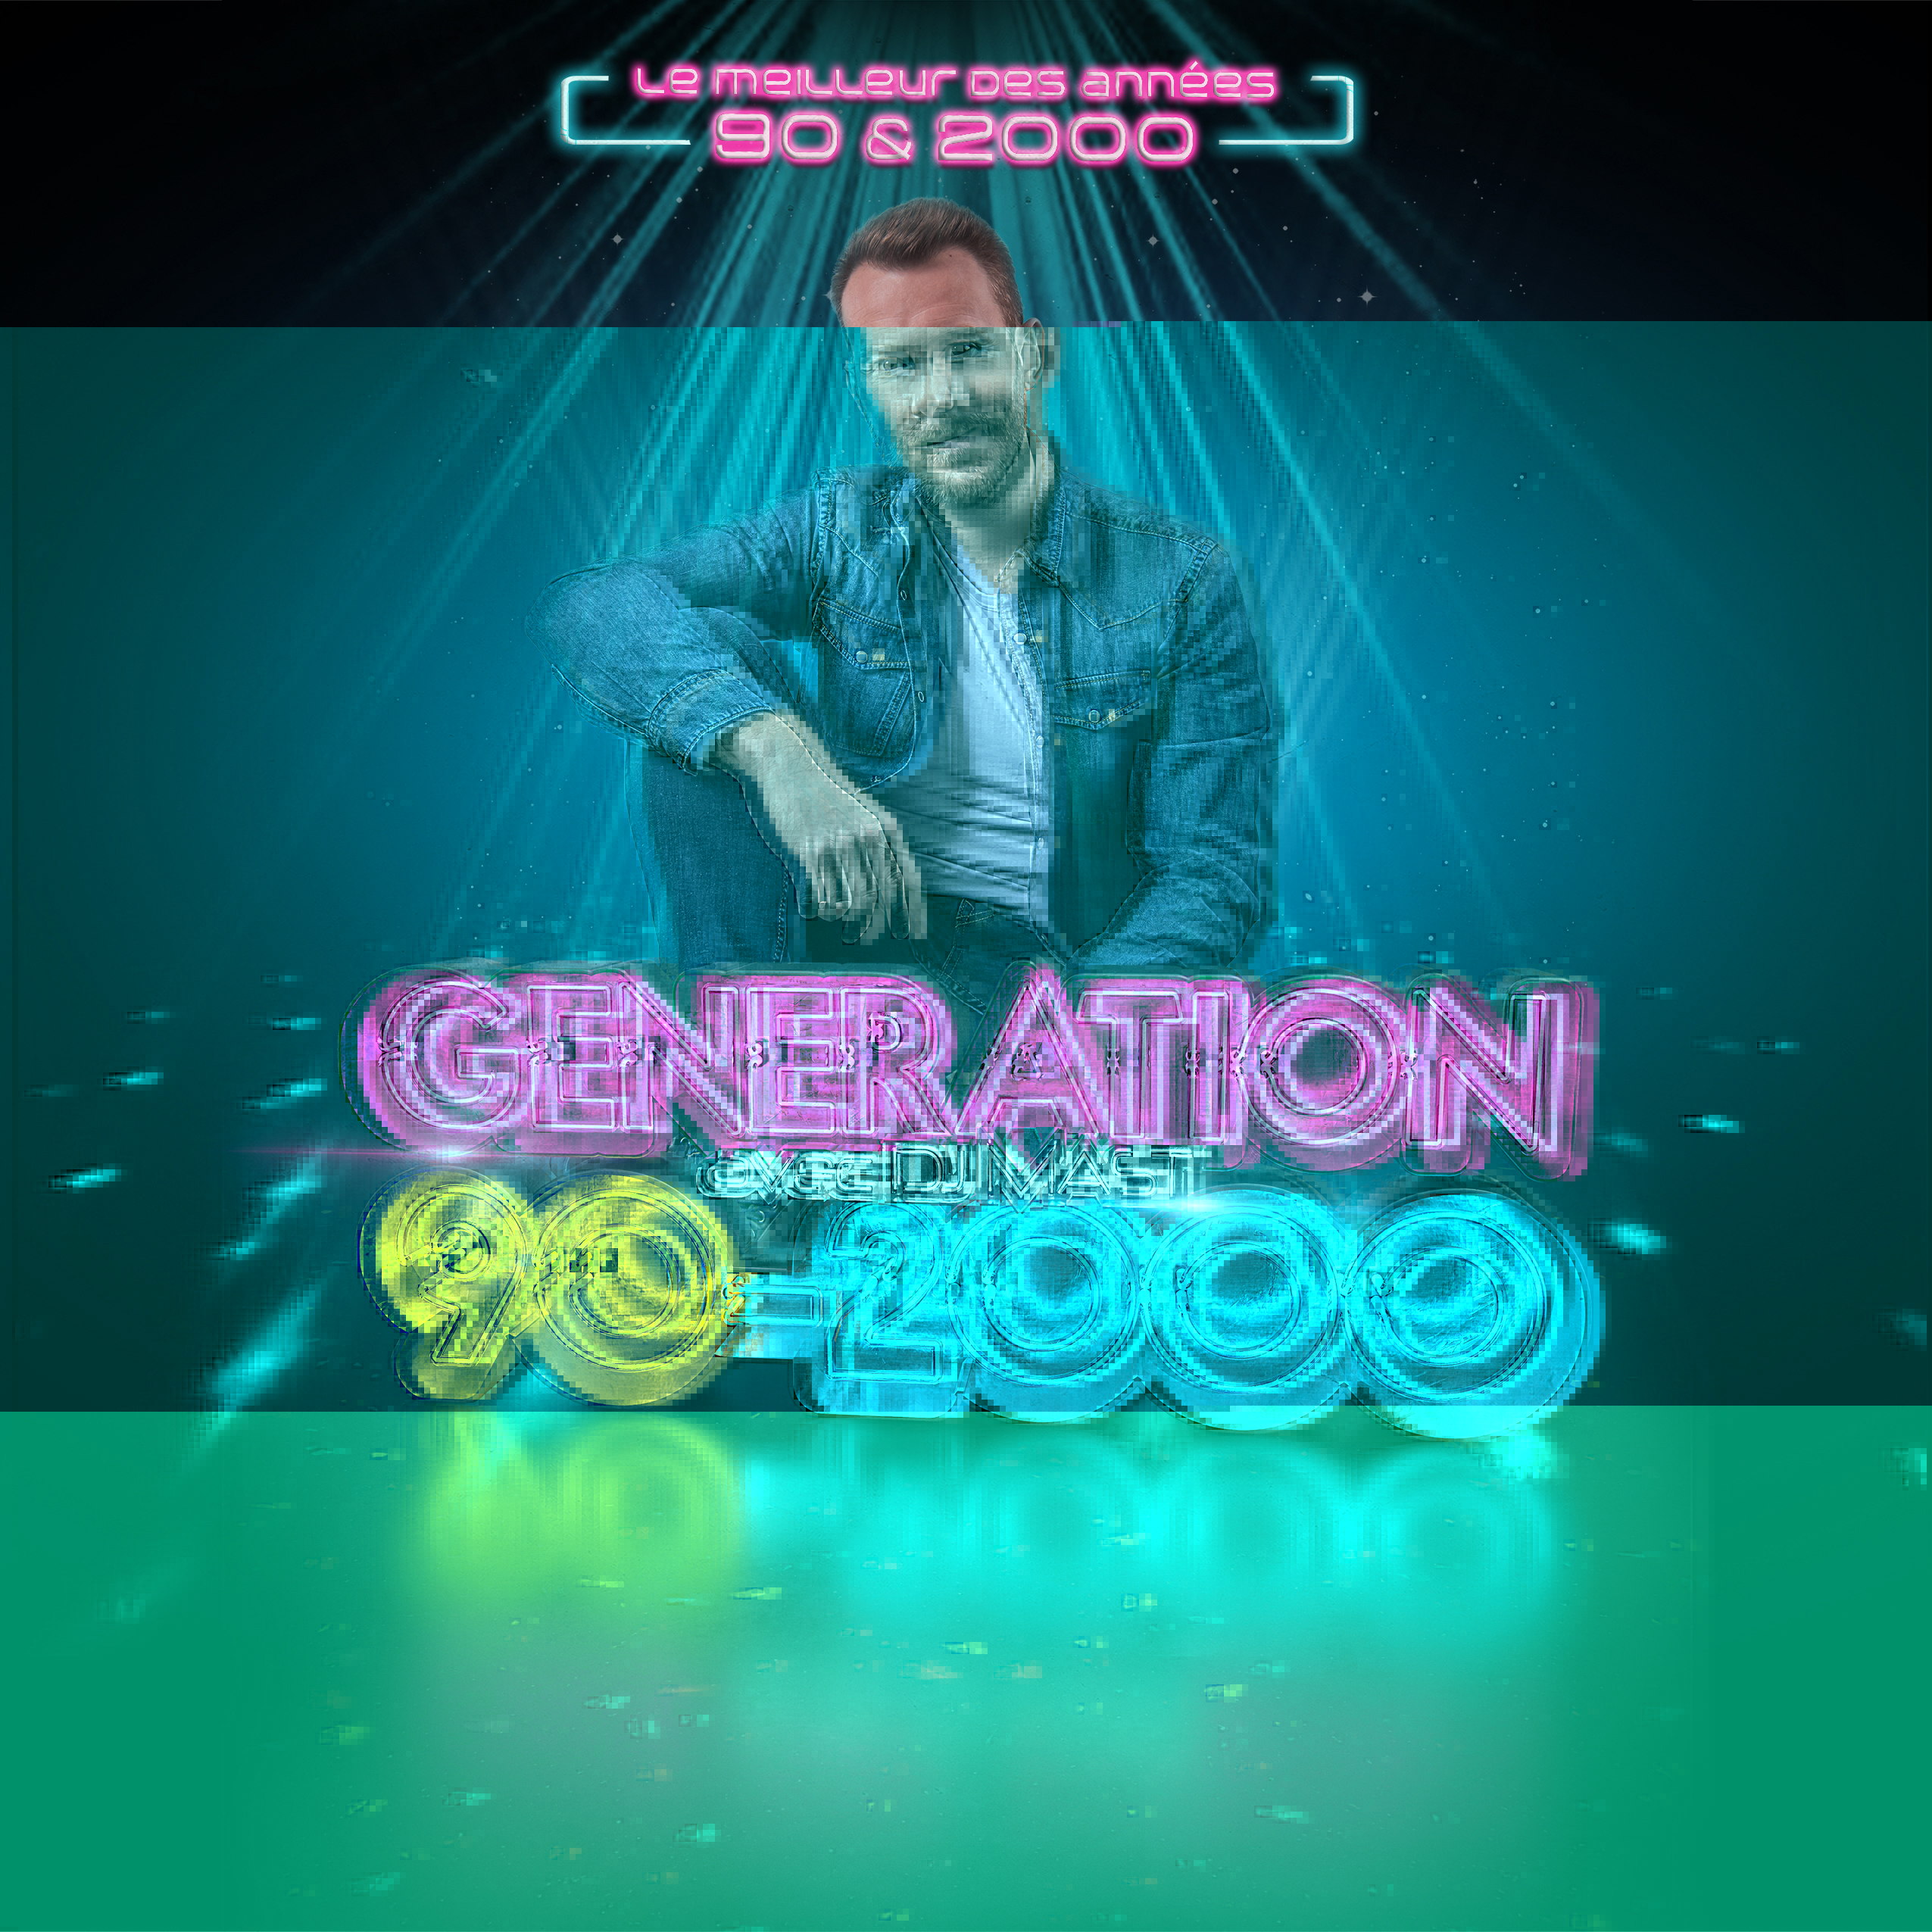 Génération 90-2000 DJ Mast